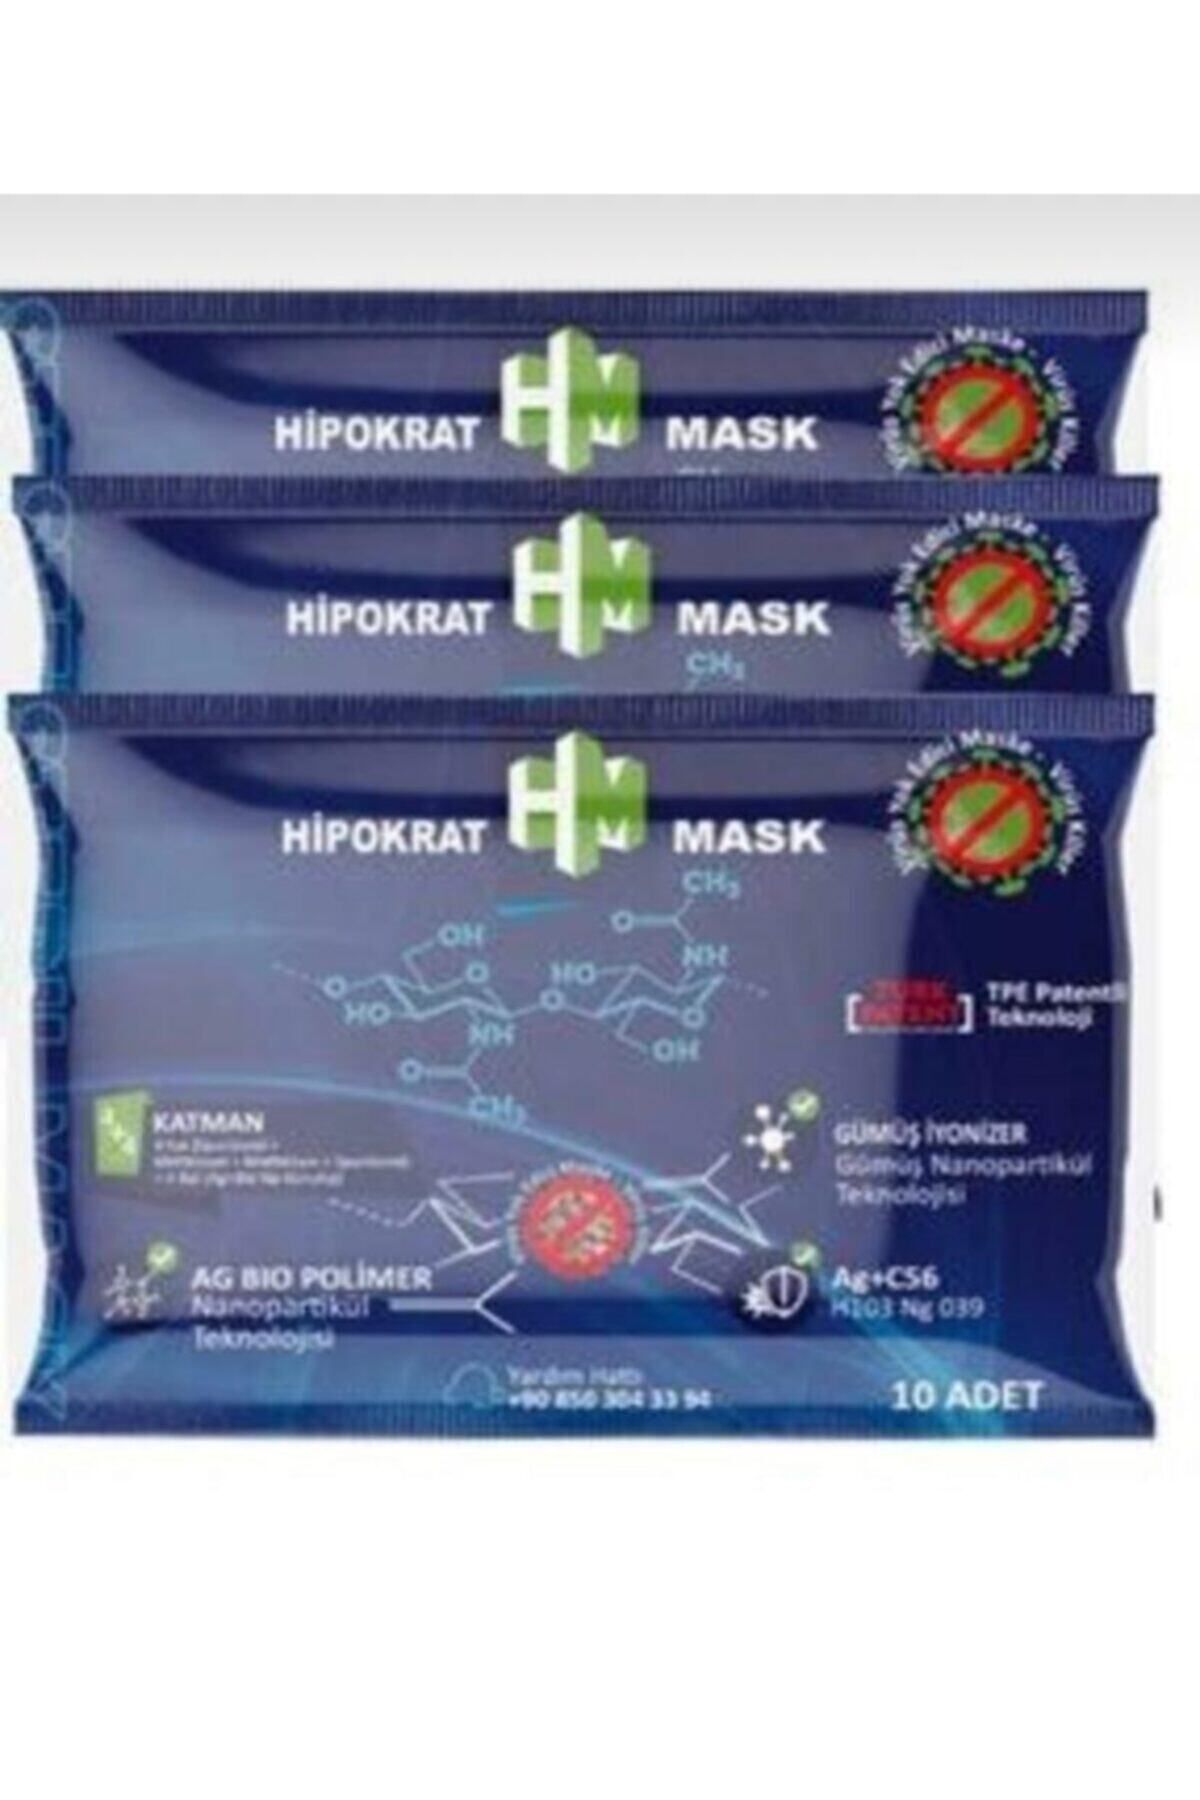 HİPOKRAT MASK 4+4=8 Katlı Cerrahi Maske 3 Paket-30 Ad. Gümüş Ion&biopolimer Katman Virüs Öldürücü(paket 10 Adet)